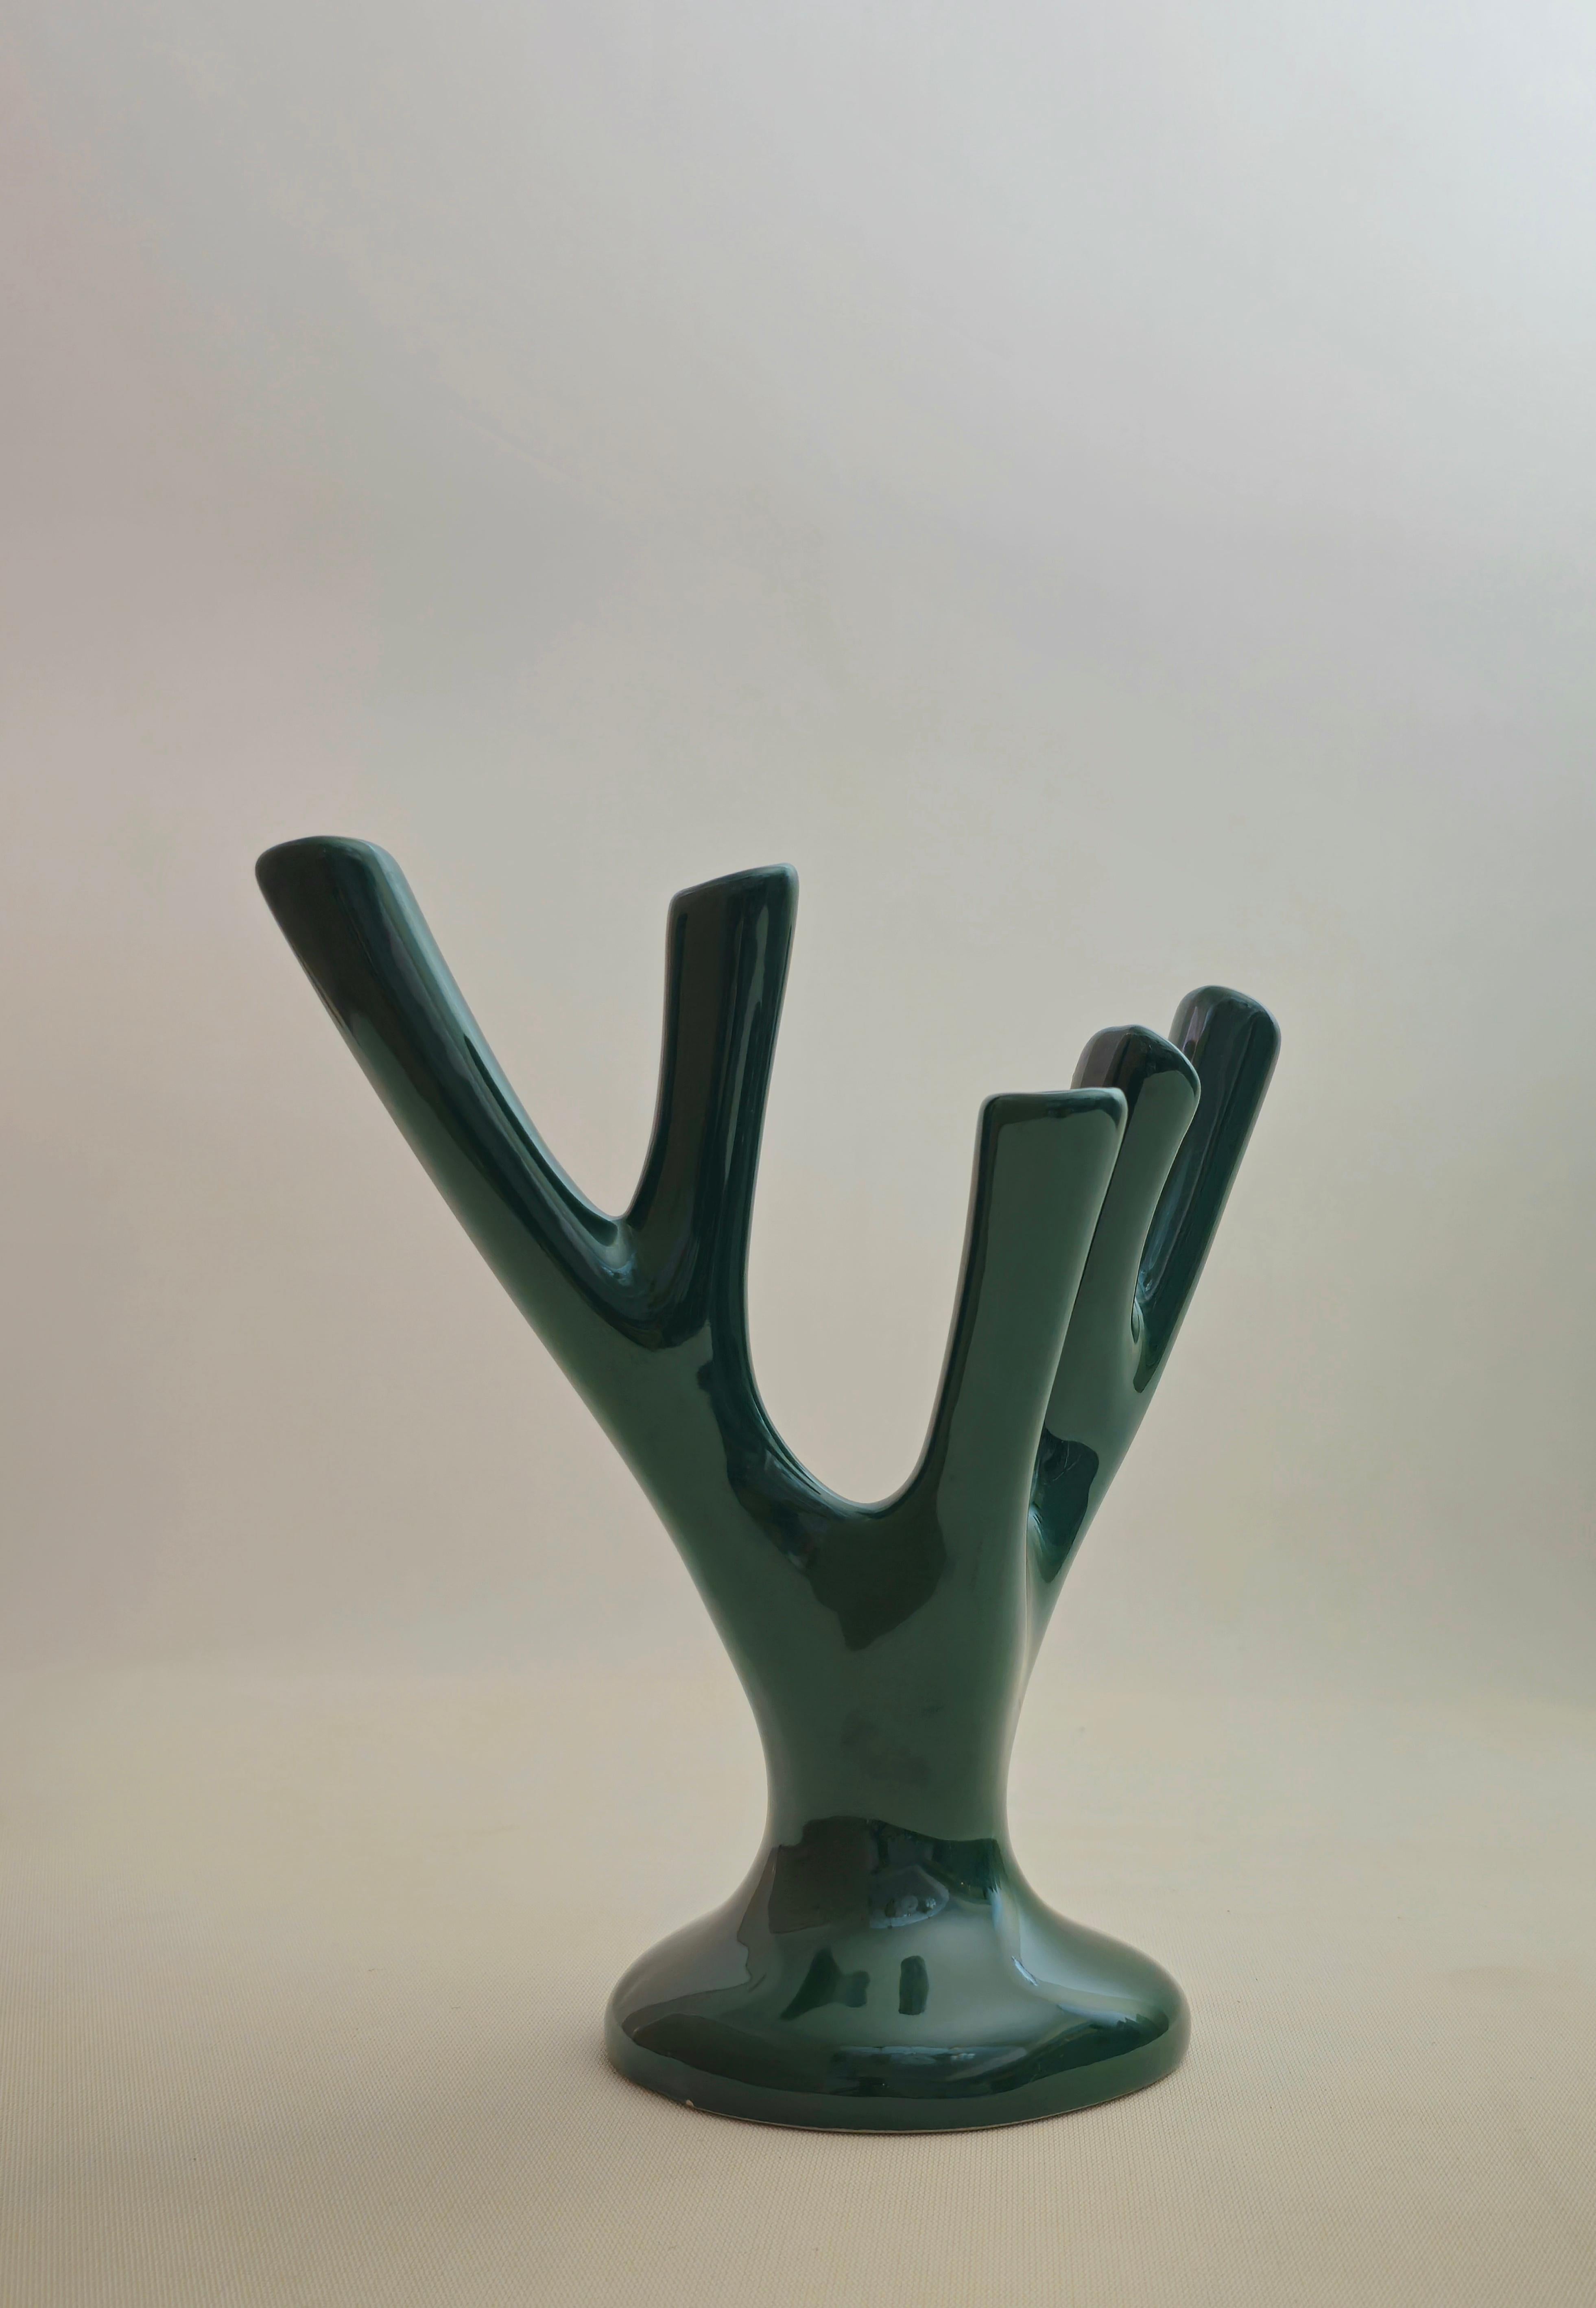 Vase Sculpture Gree Ceramic Coral Flower Holder Midcentury Italian Design, 1970s For Sale 2